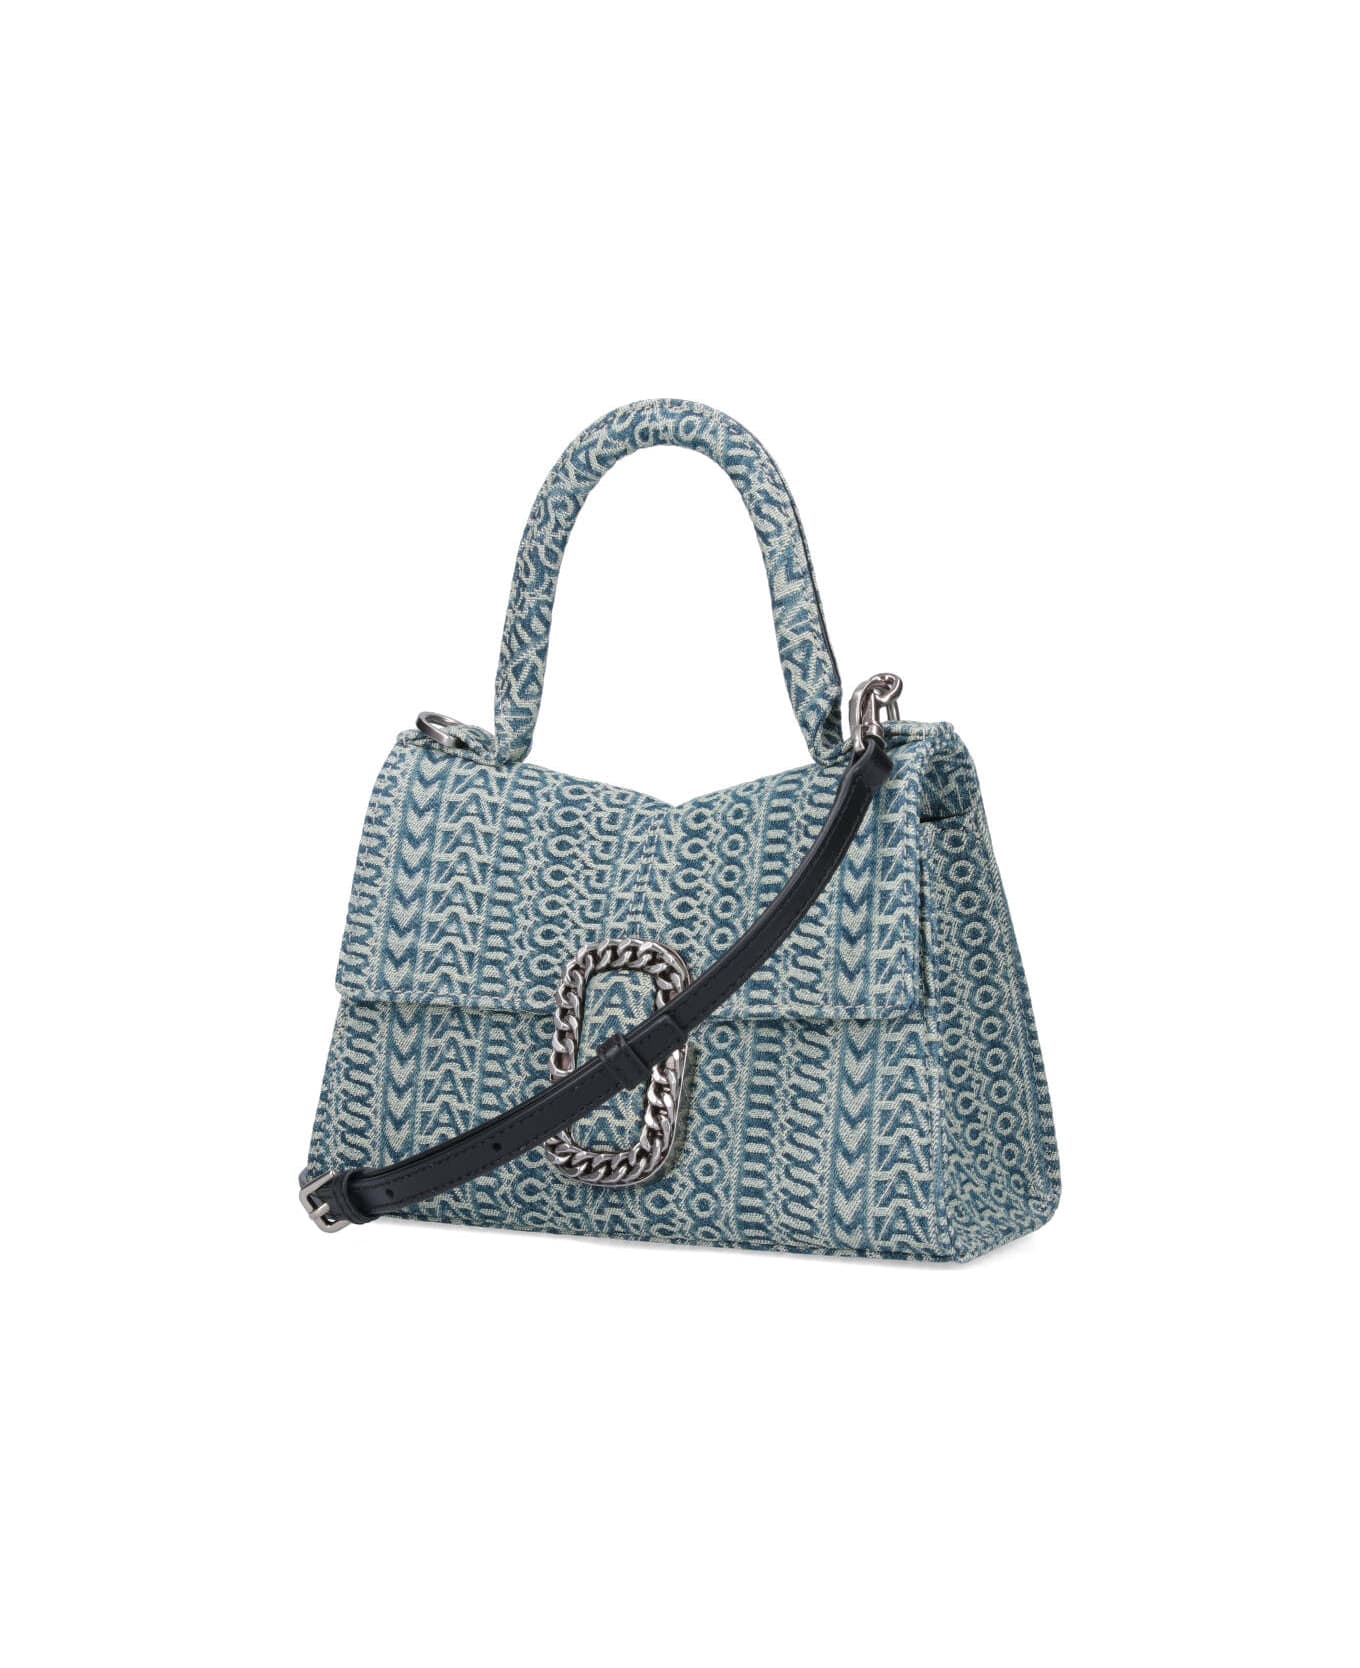 Marc Jacobs The Top Handle Handbag - Light blue トートバッグ